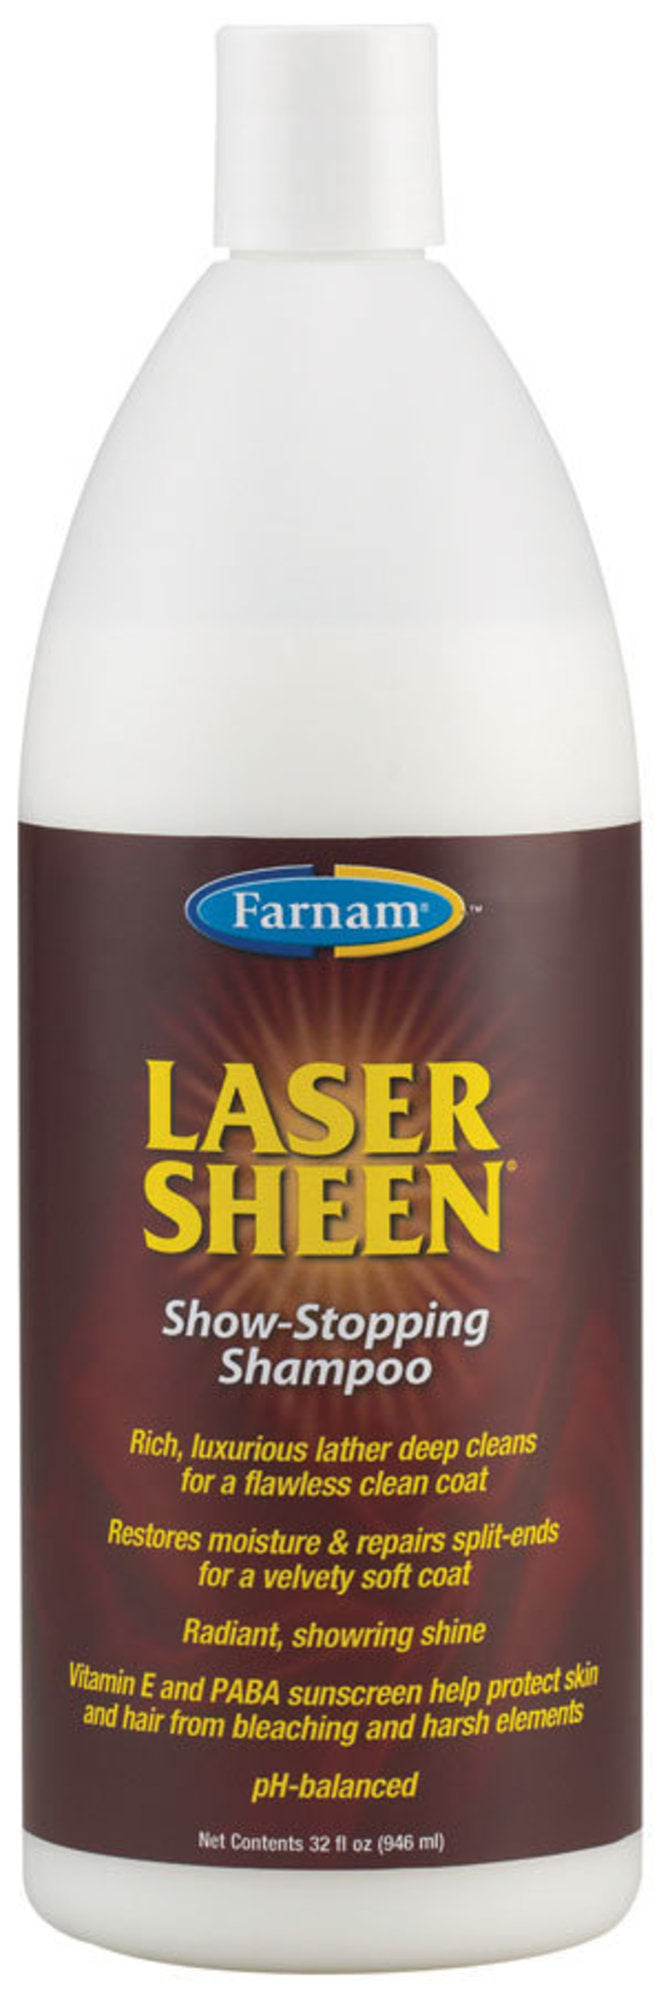 Laser Sheen Show-Stopping Shampoo